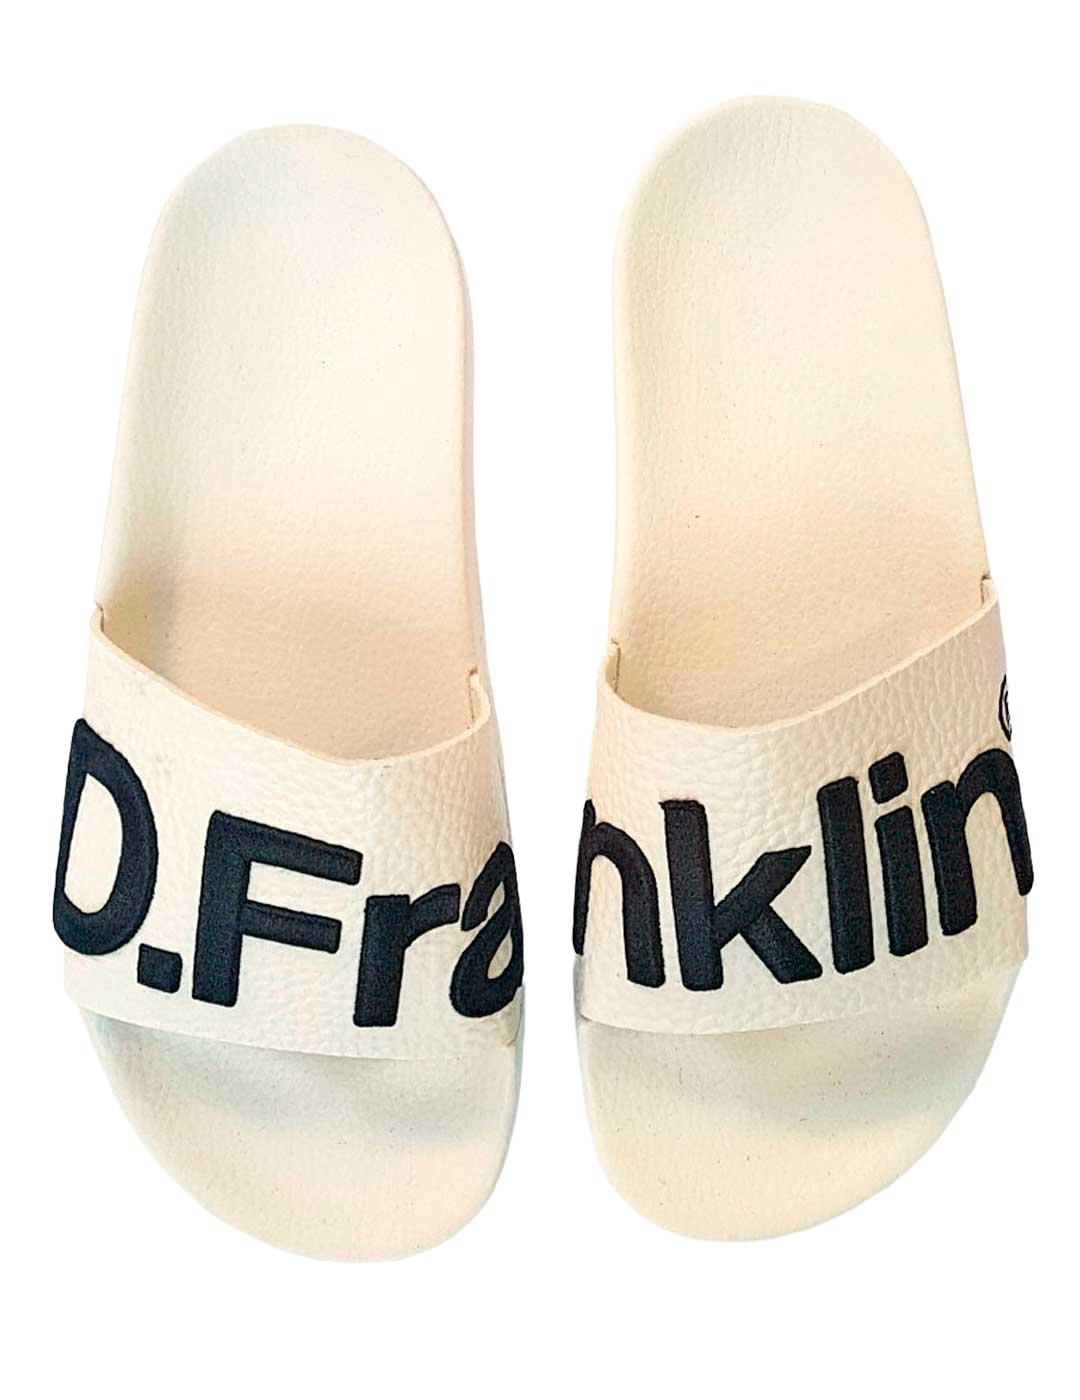 D.Franklin - 